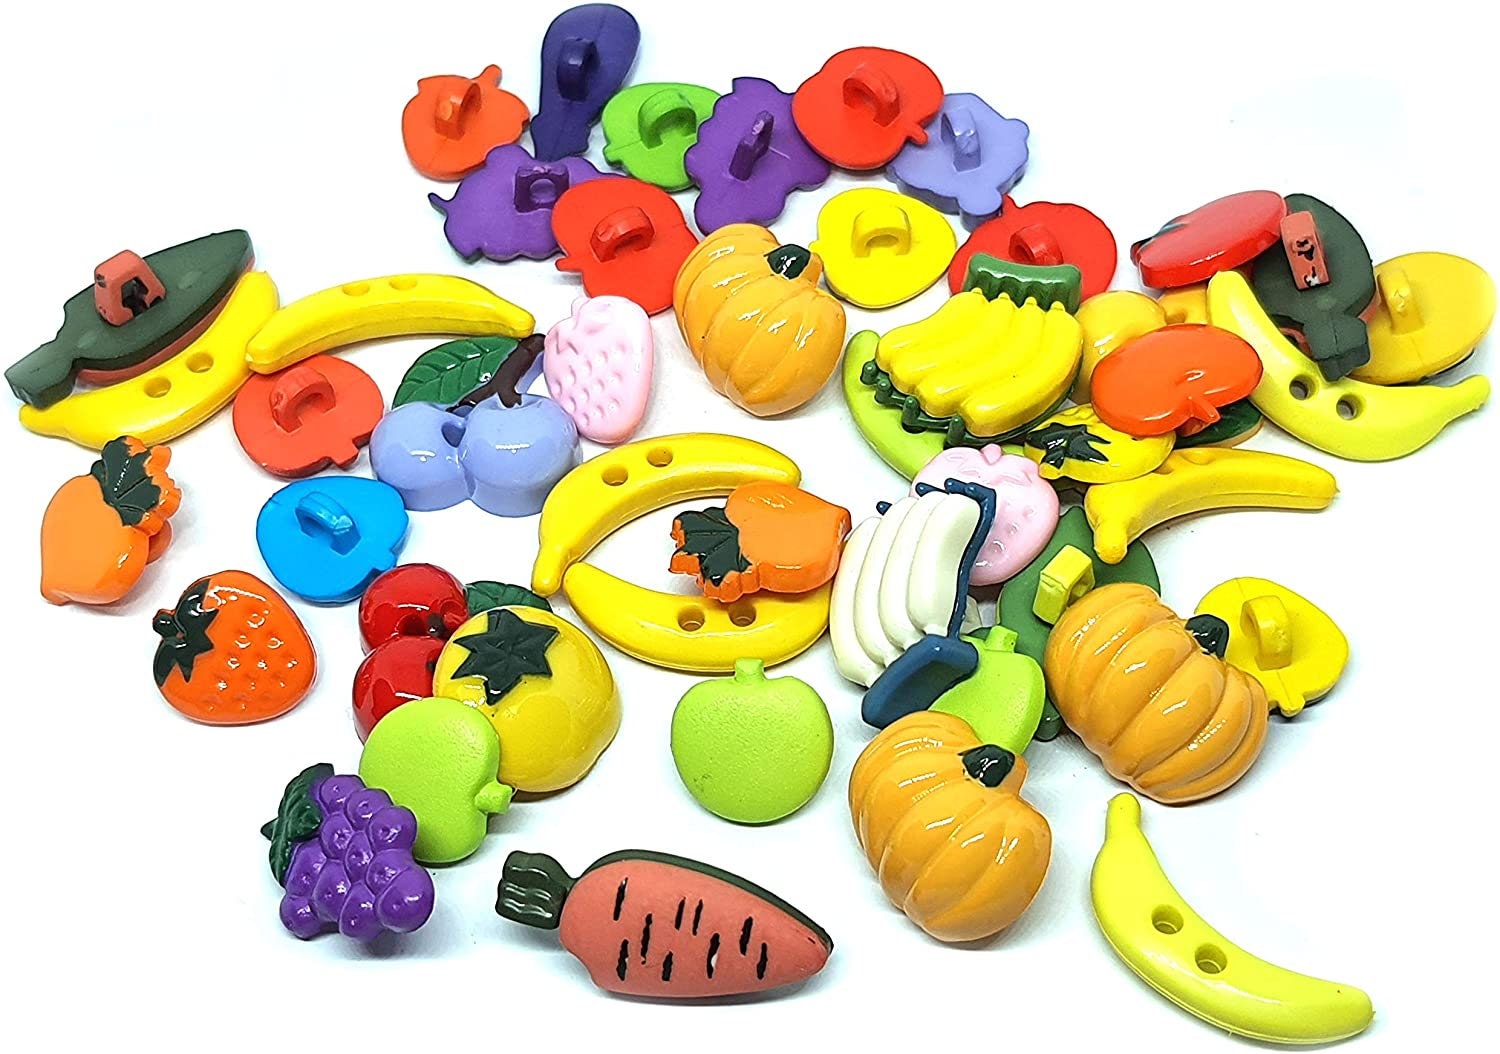 10 colorful buttons apple shape